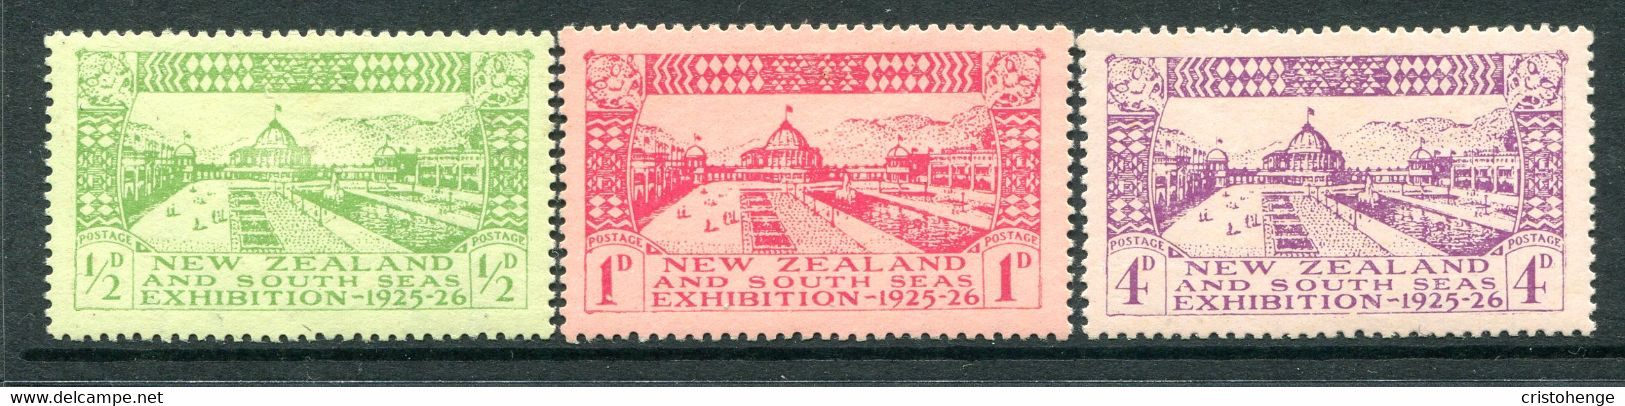 New Zealand 1925 Dunedin Exhibition Set HM (SG 463-465) - Nuevos